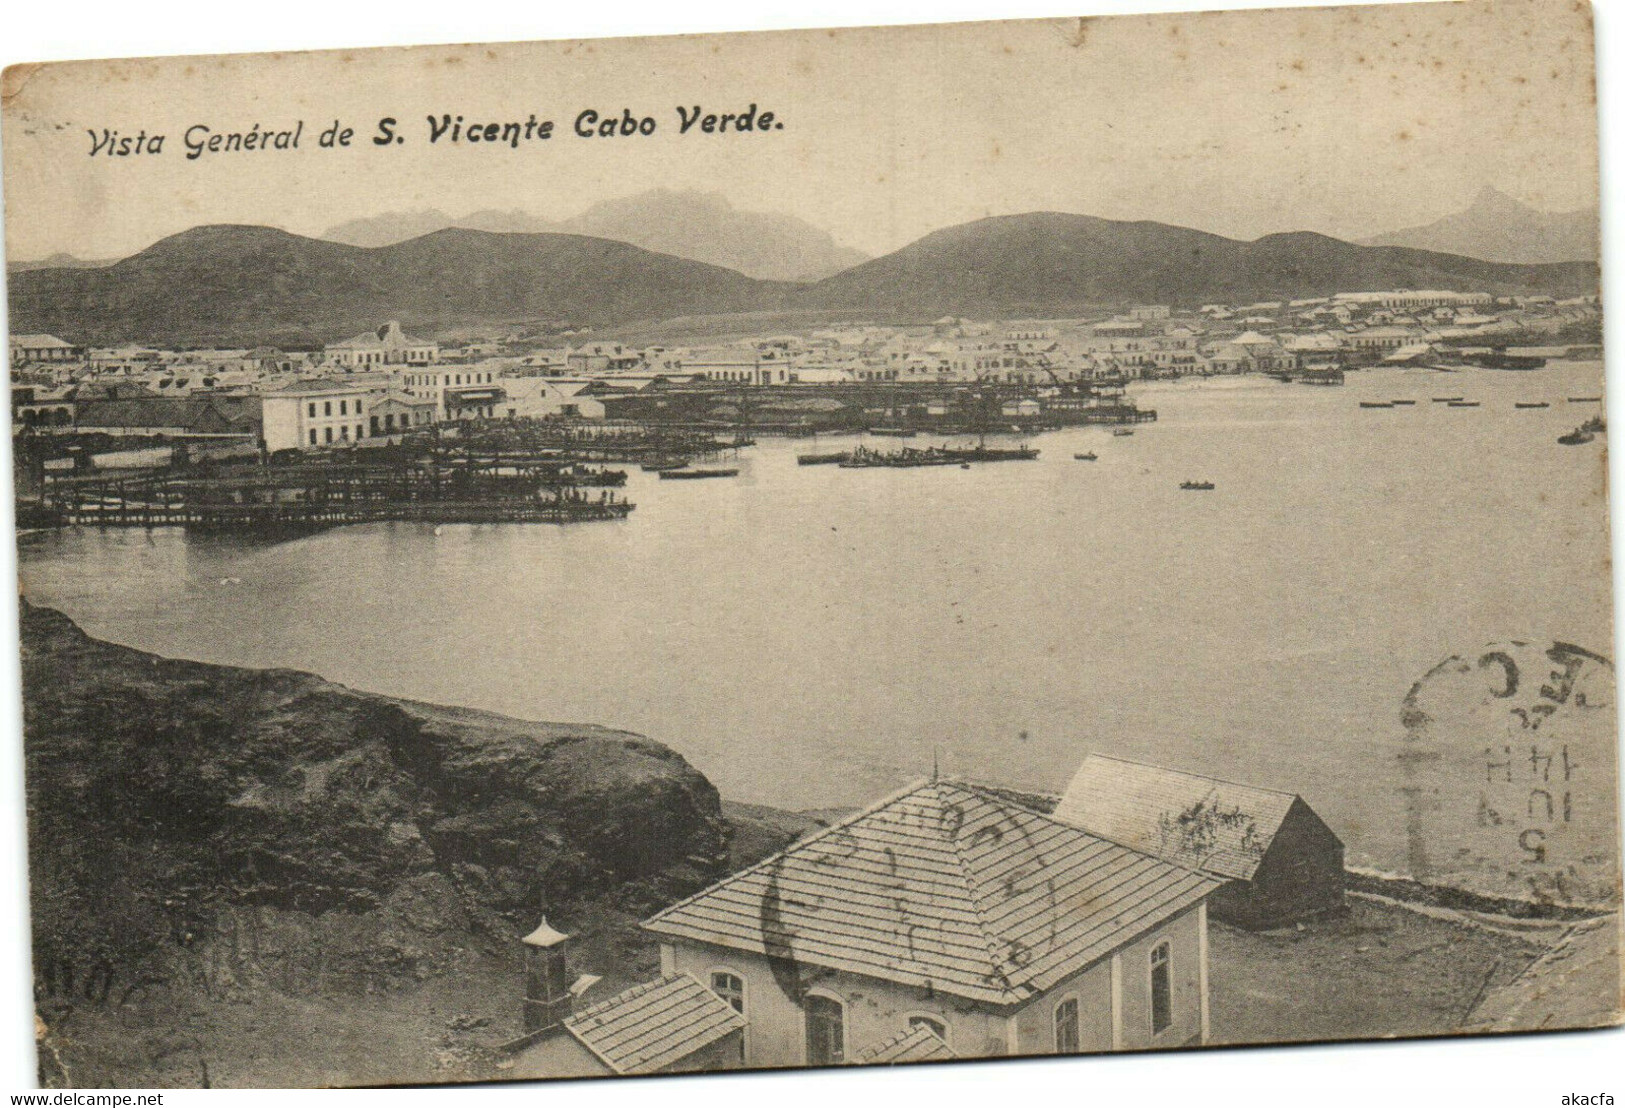 PC PORTUGAL, CABO VERDE, S. VICENTE, VISTA GENERAL, Vintage Postcard (b30310) - Cape Verde